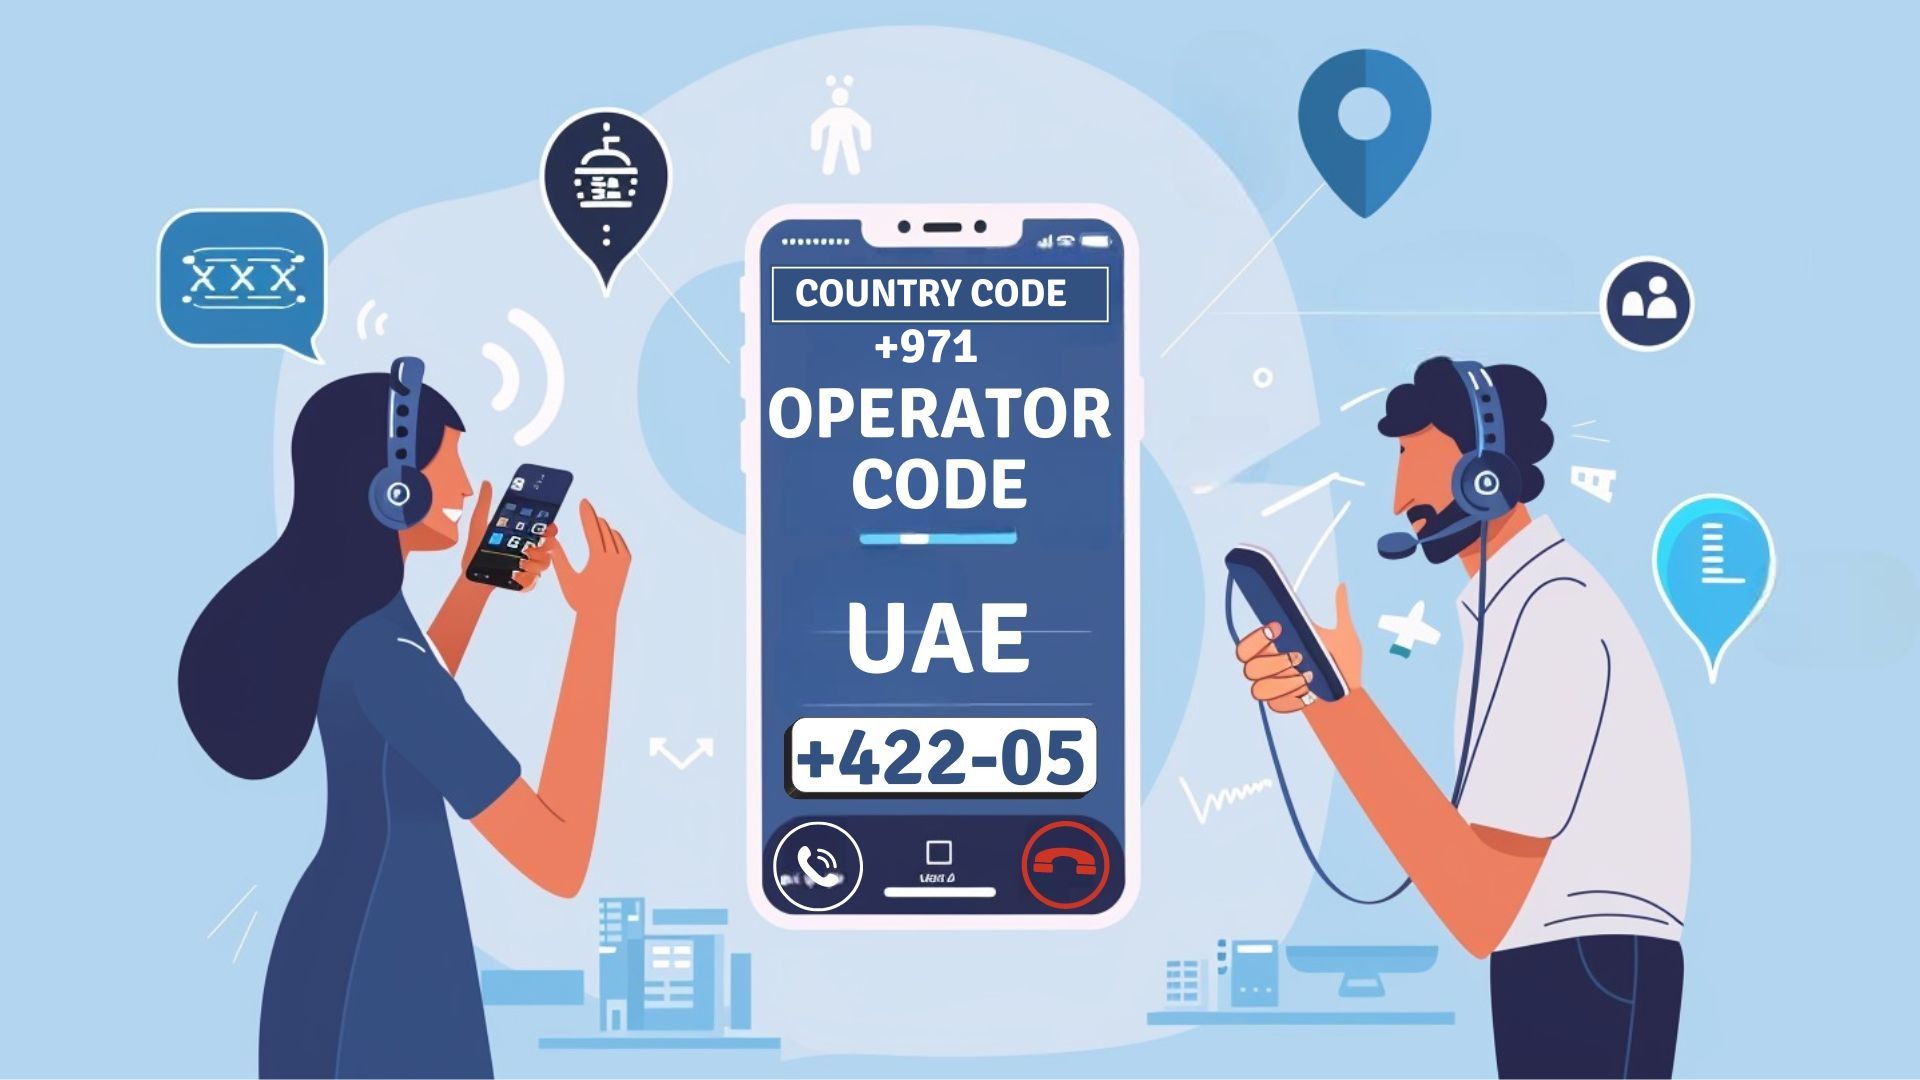 UAE Mobile Network Operator Codes